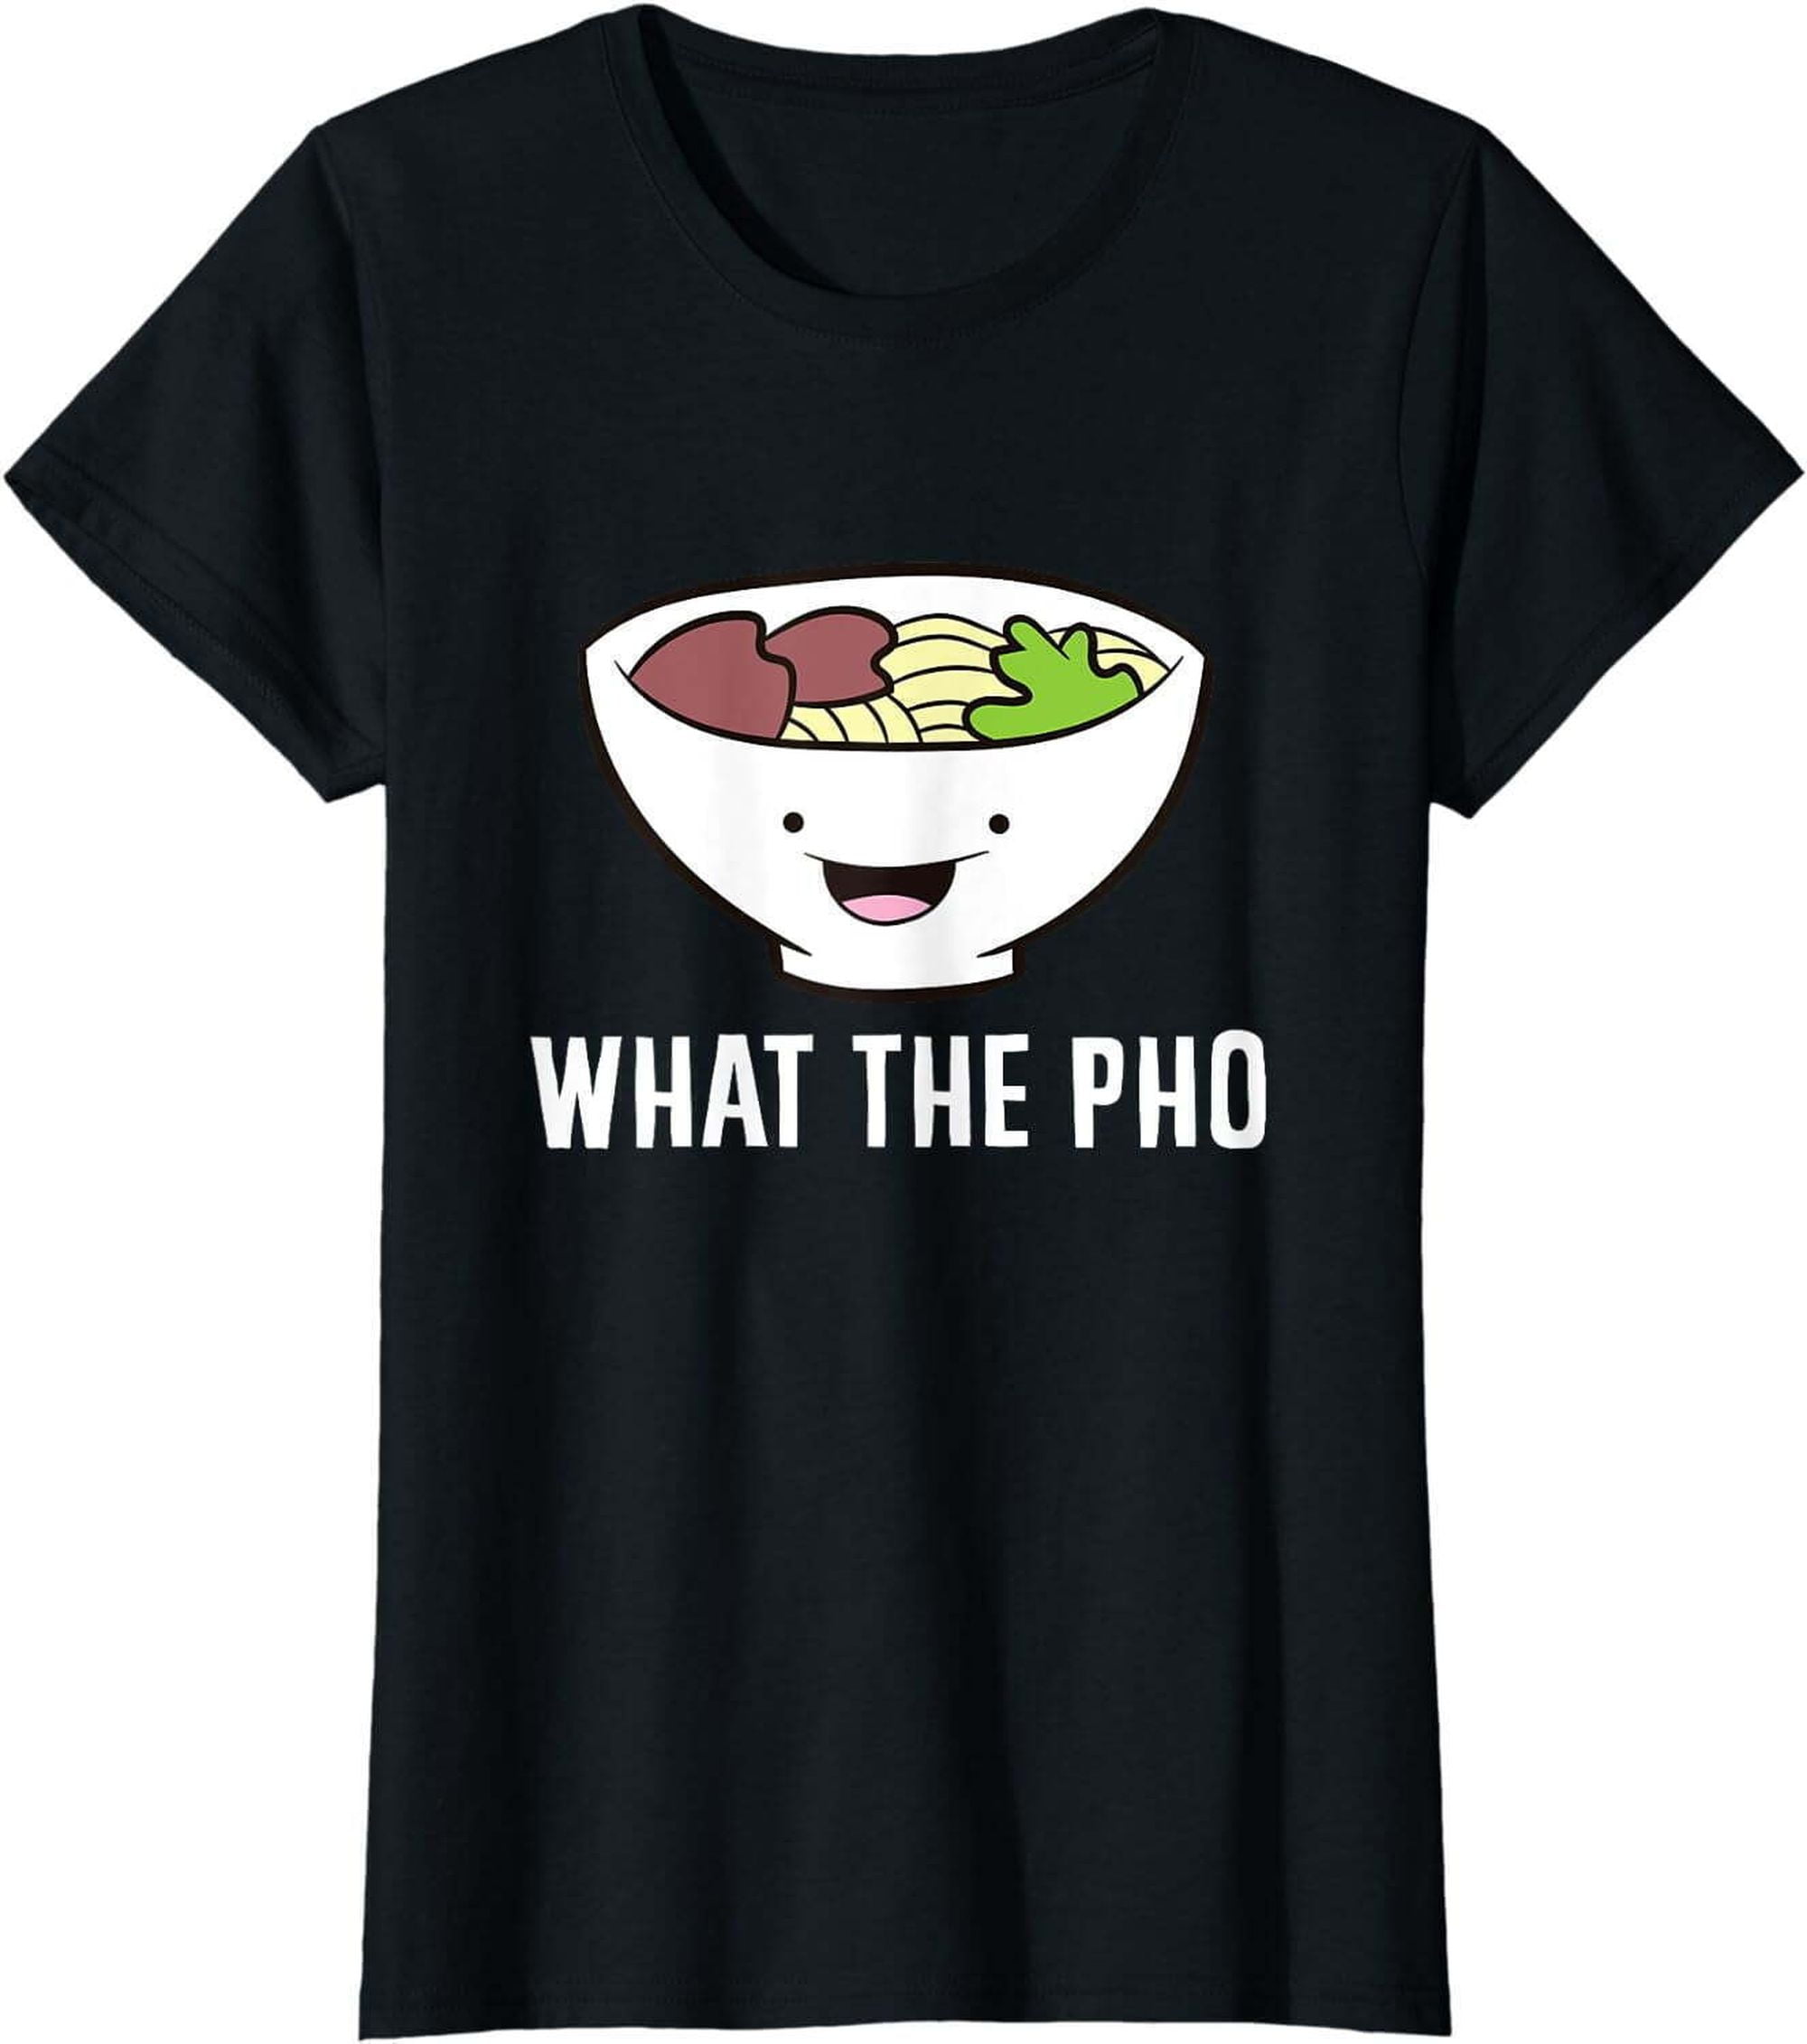 Vietnamese Pho Lover's T-Shirt: Authentic What The Pho Design - Walmart.com